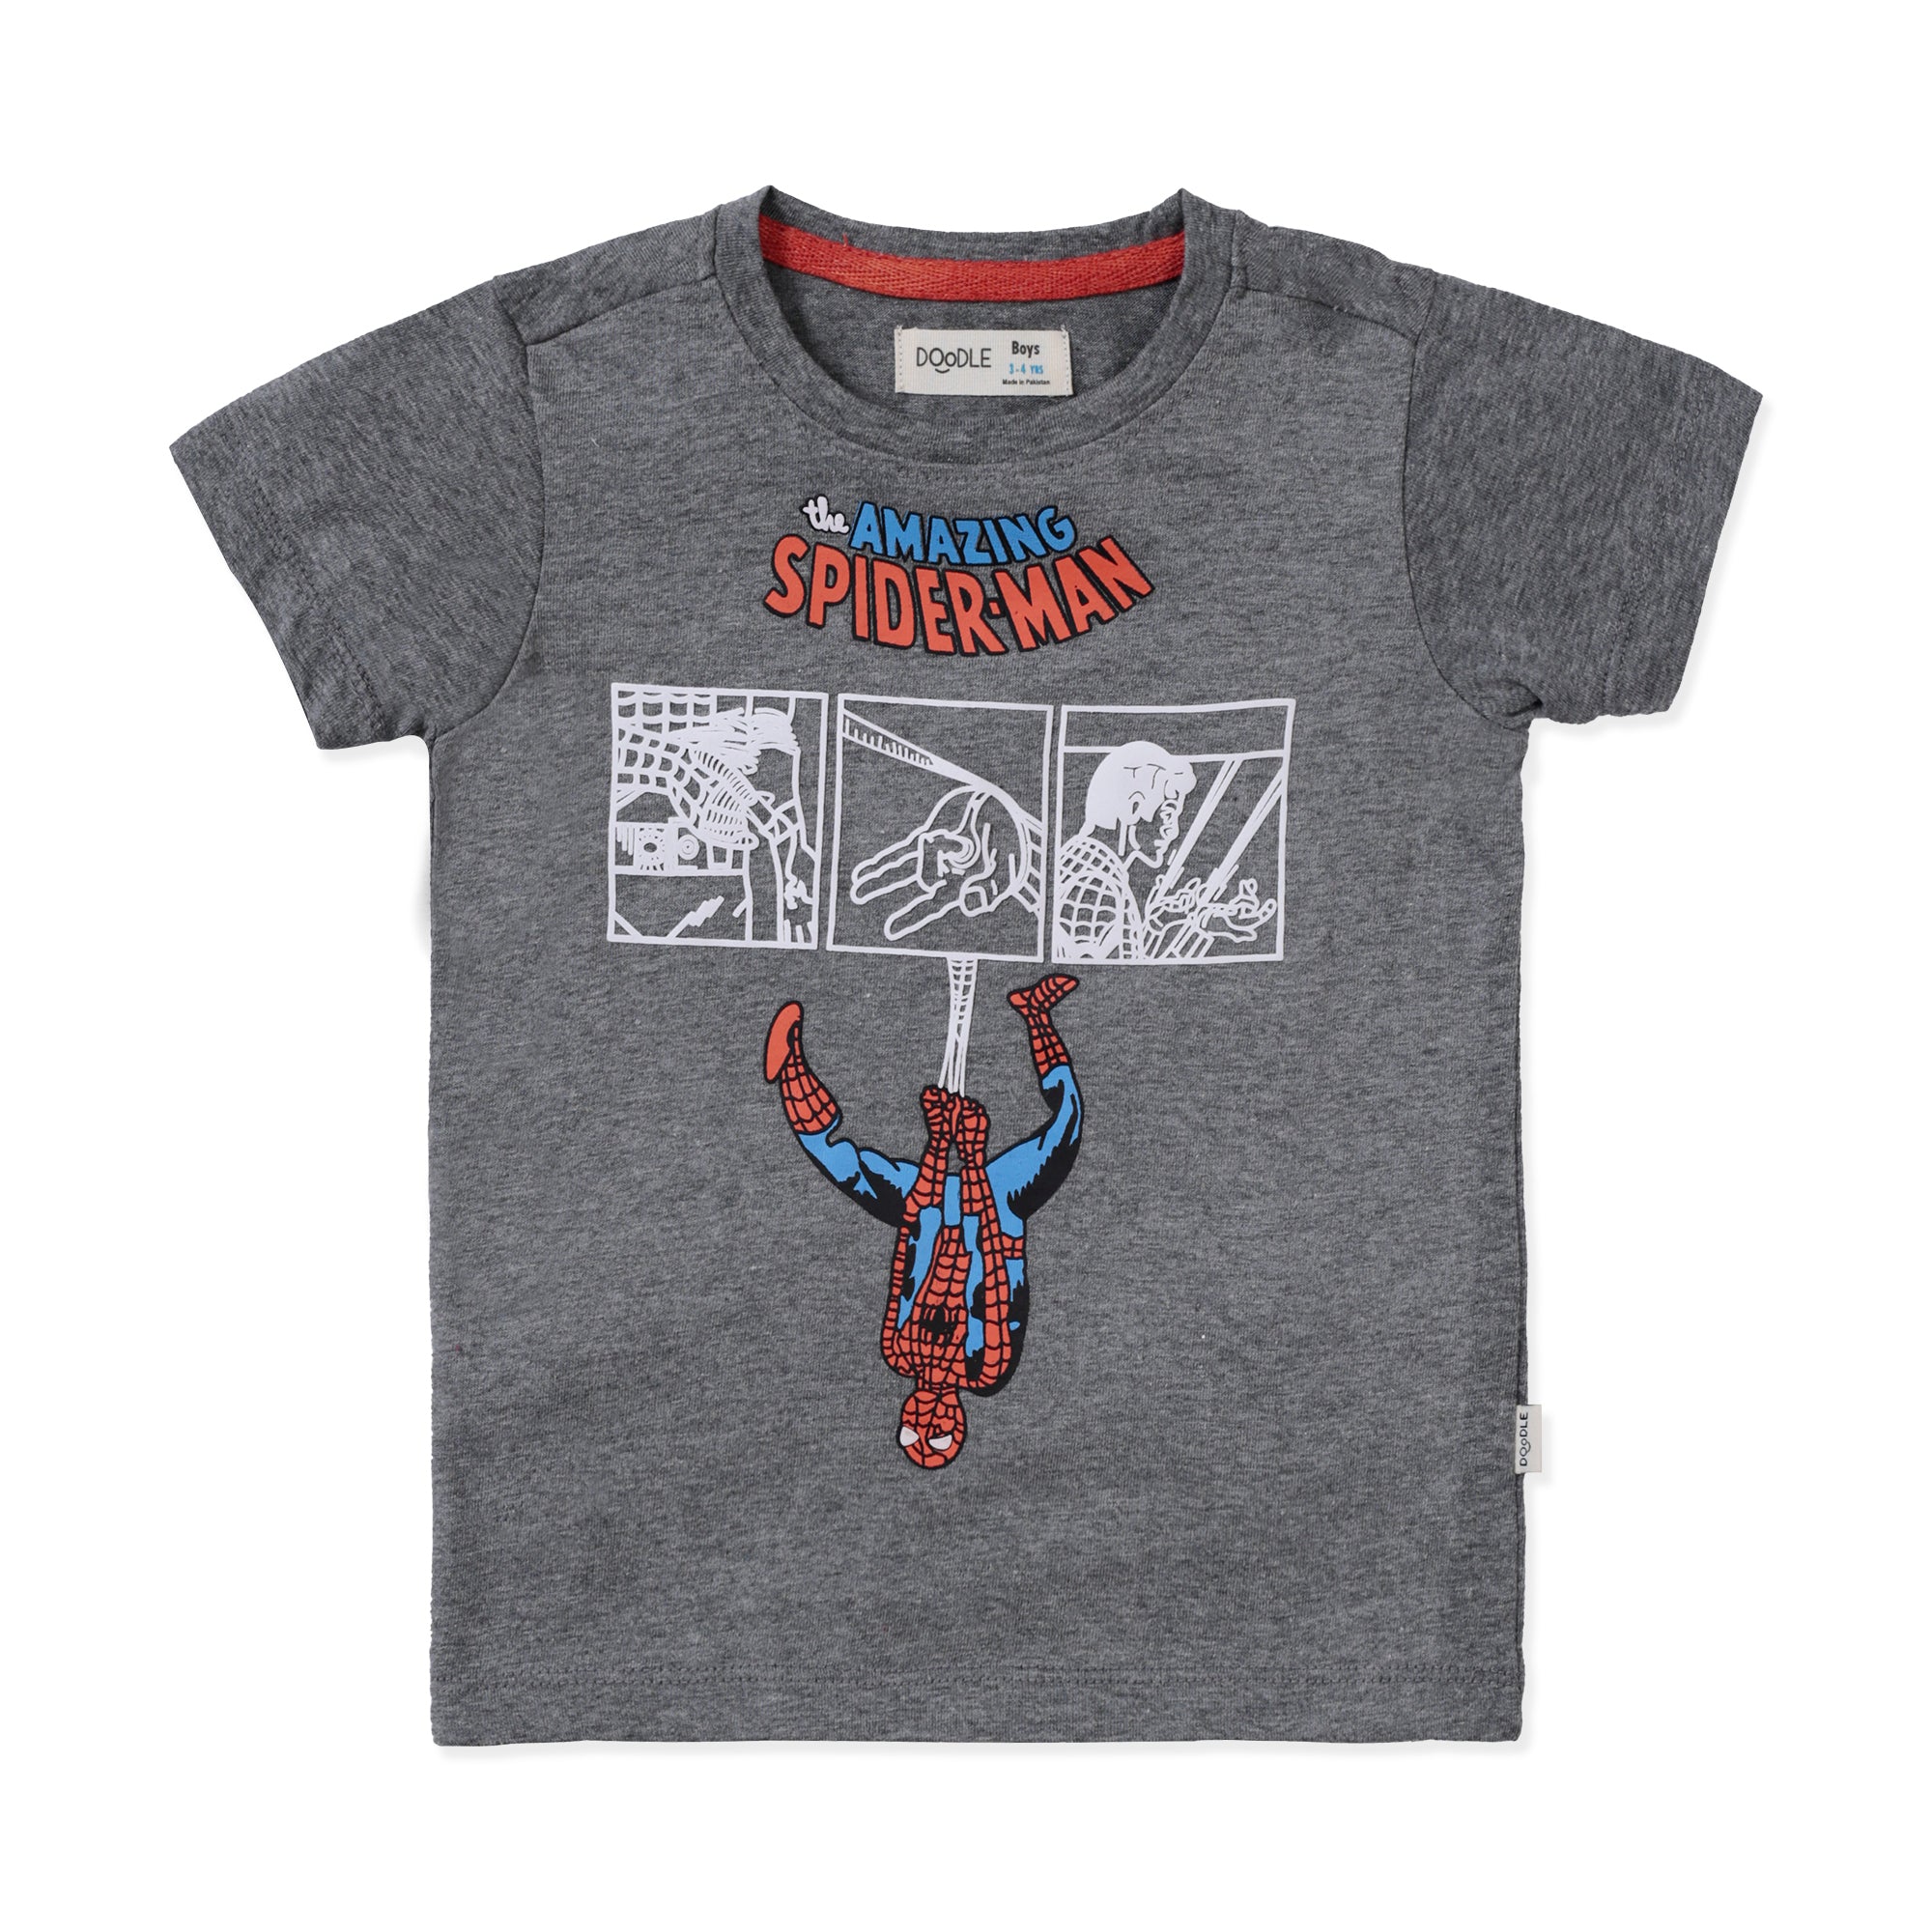 Grey Spiderman Graphic T-Shirt